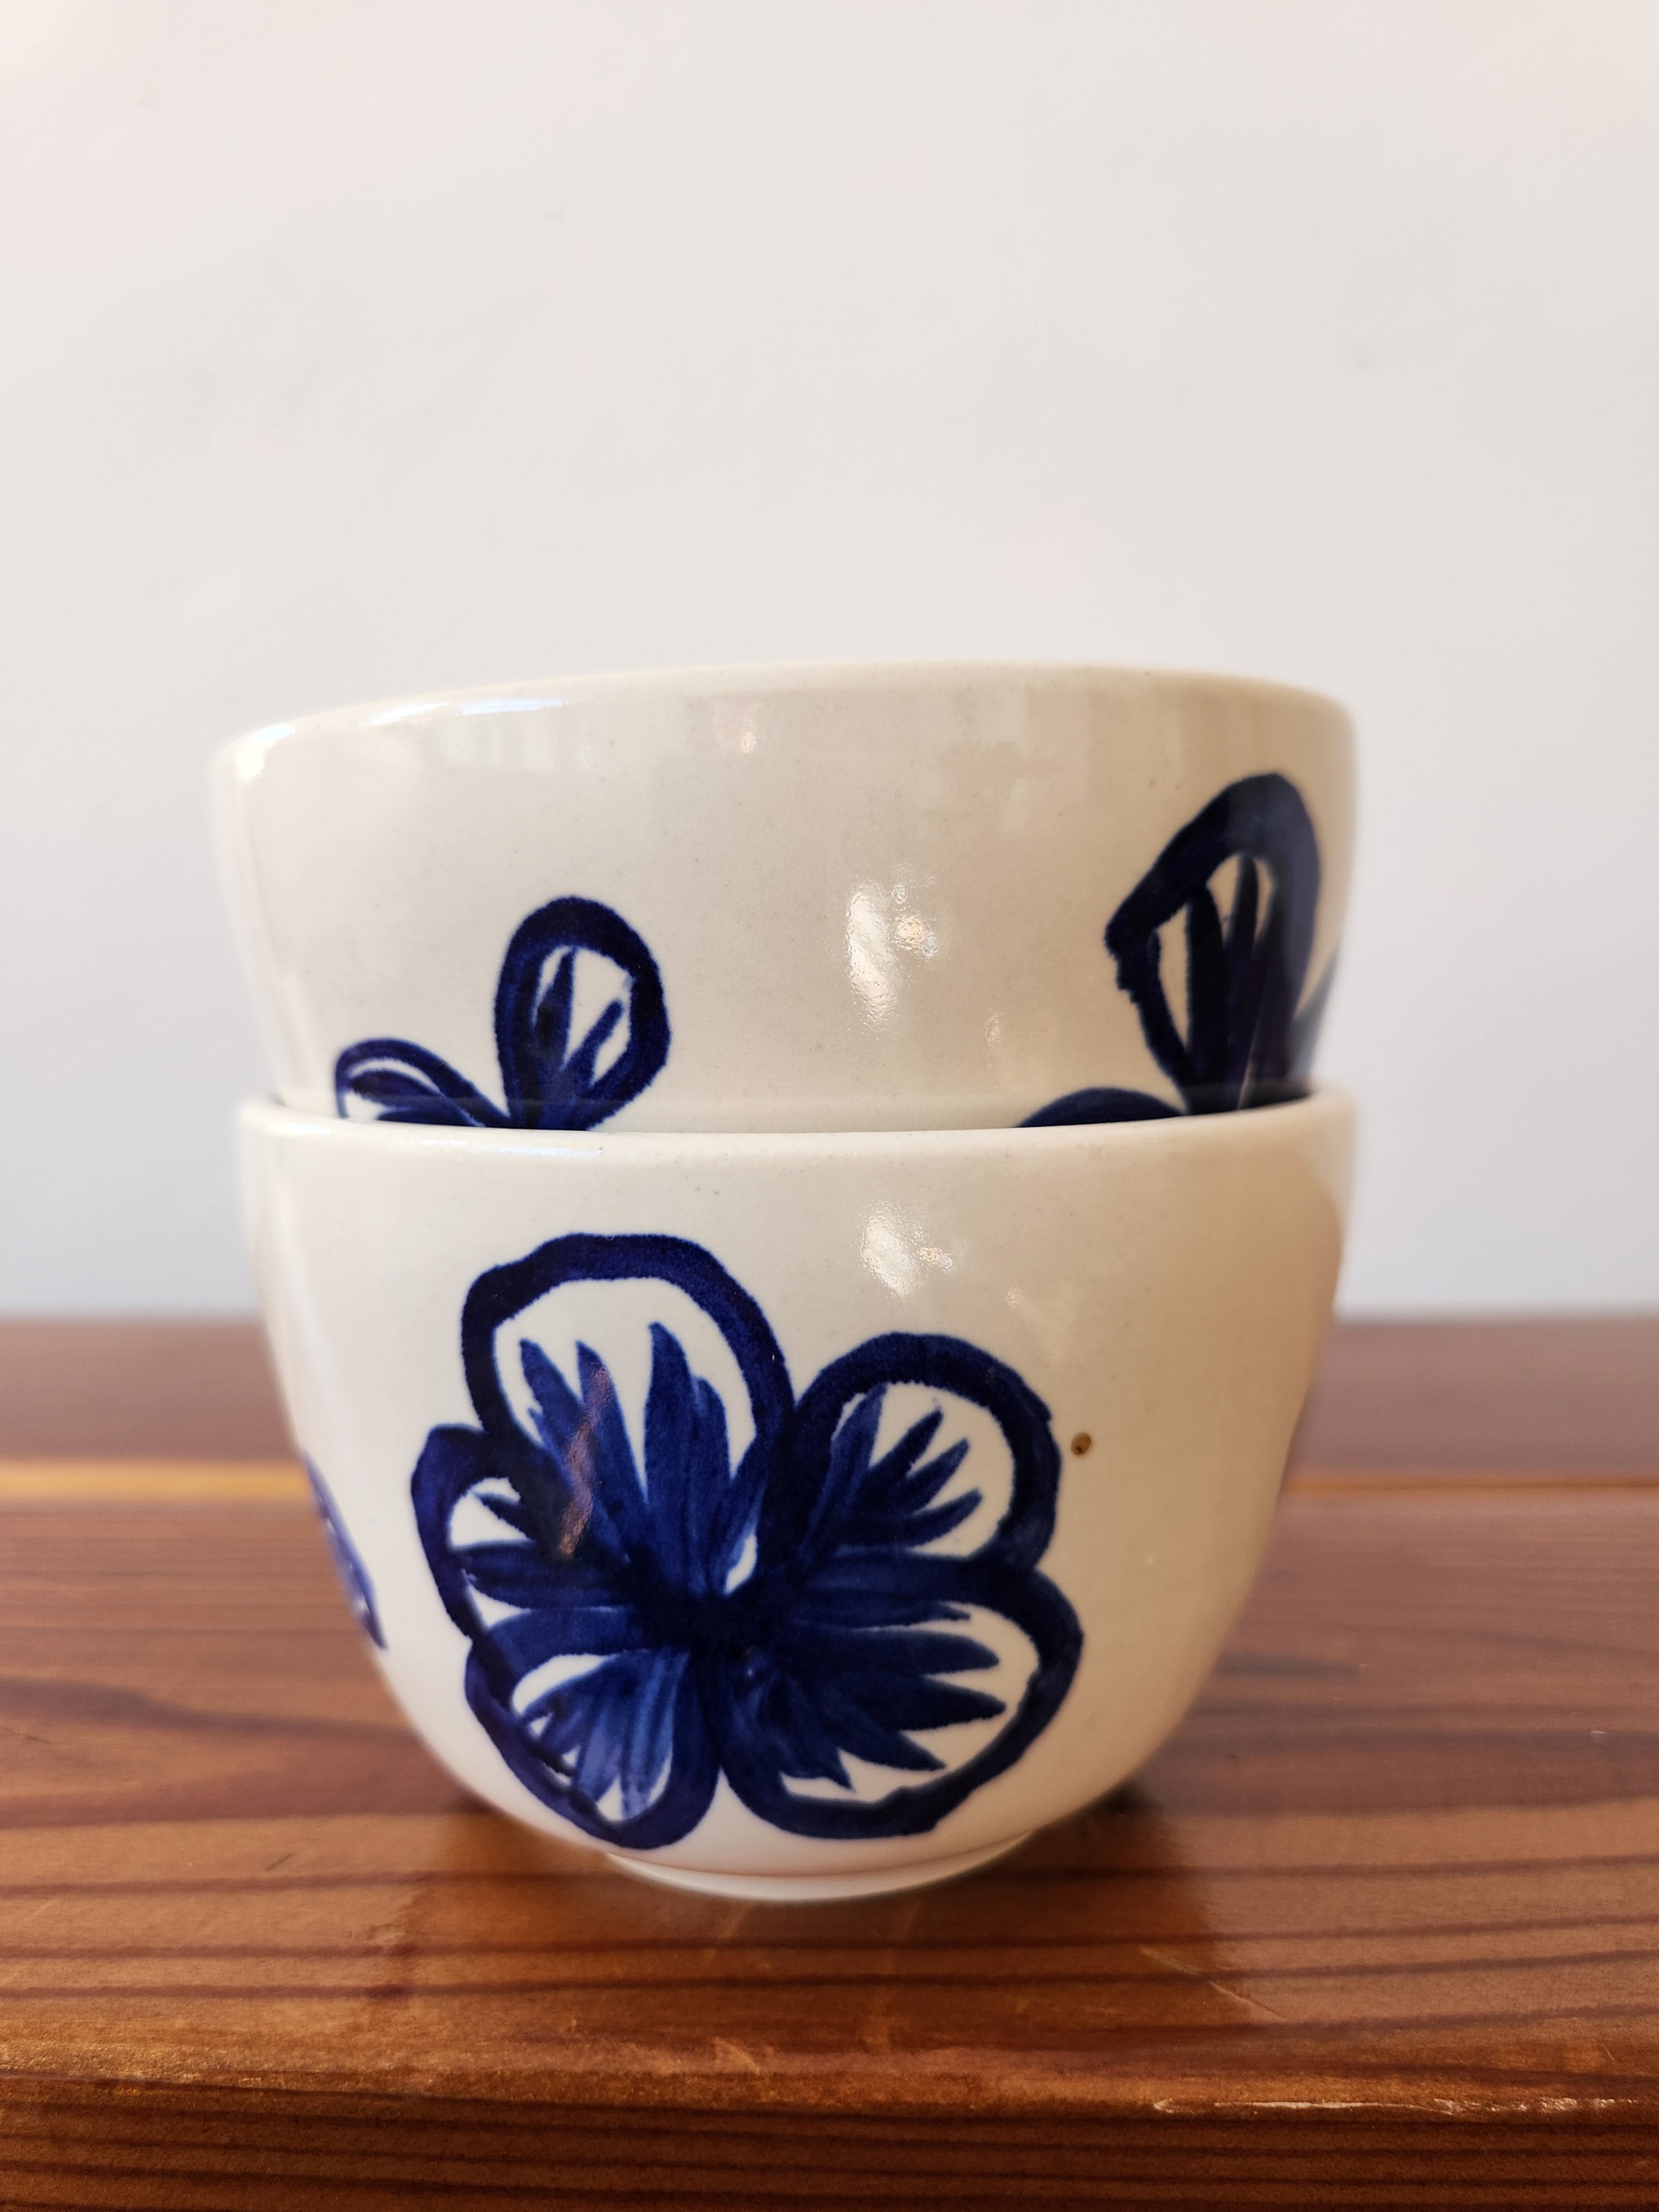 Pair of Blue Flower Bowls